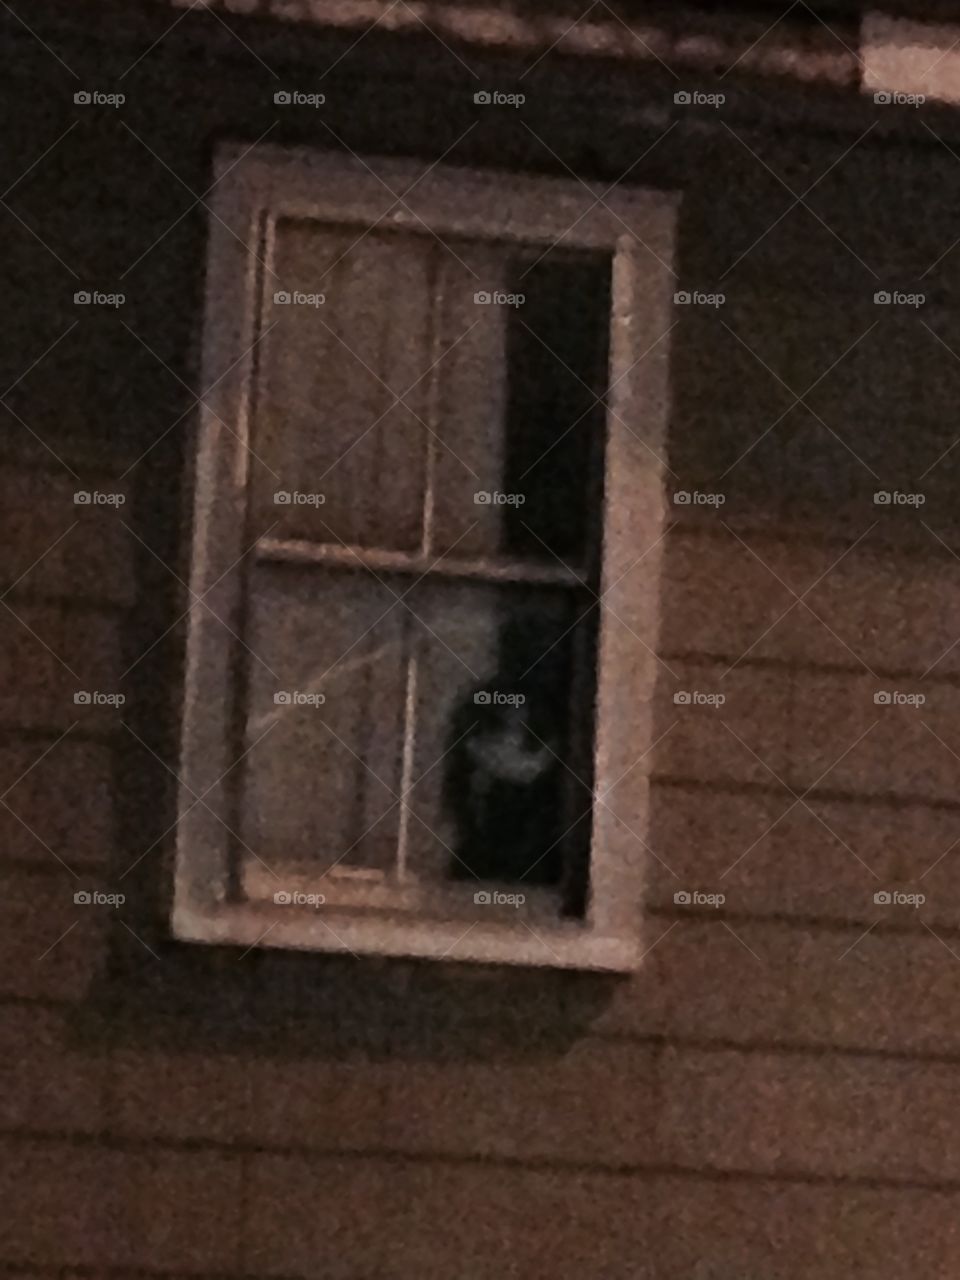 Creepy doll in the window 